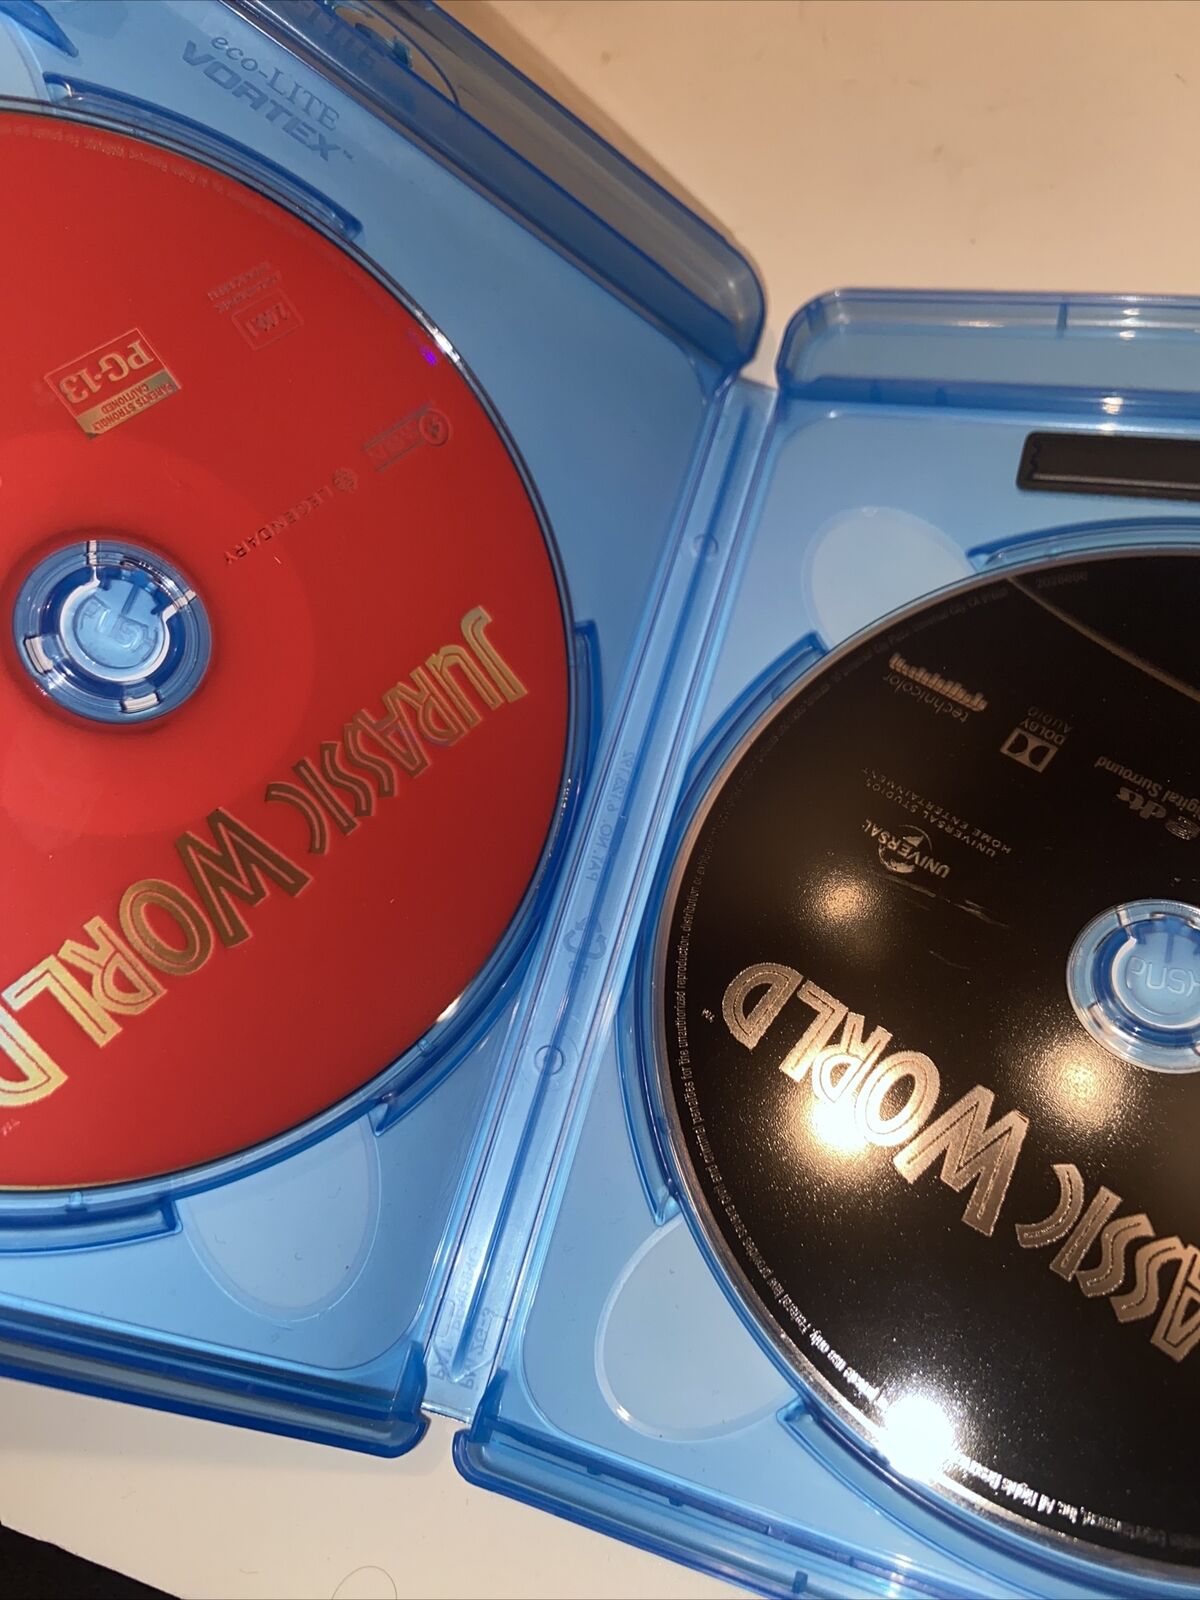 Jurassic World (Blu-ray/DVD, 2015, 2-Disc Set, Includes Digital Copy)